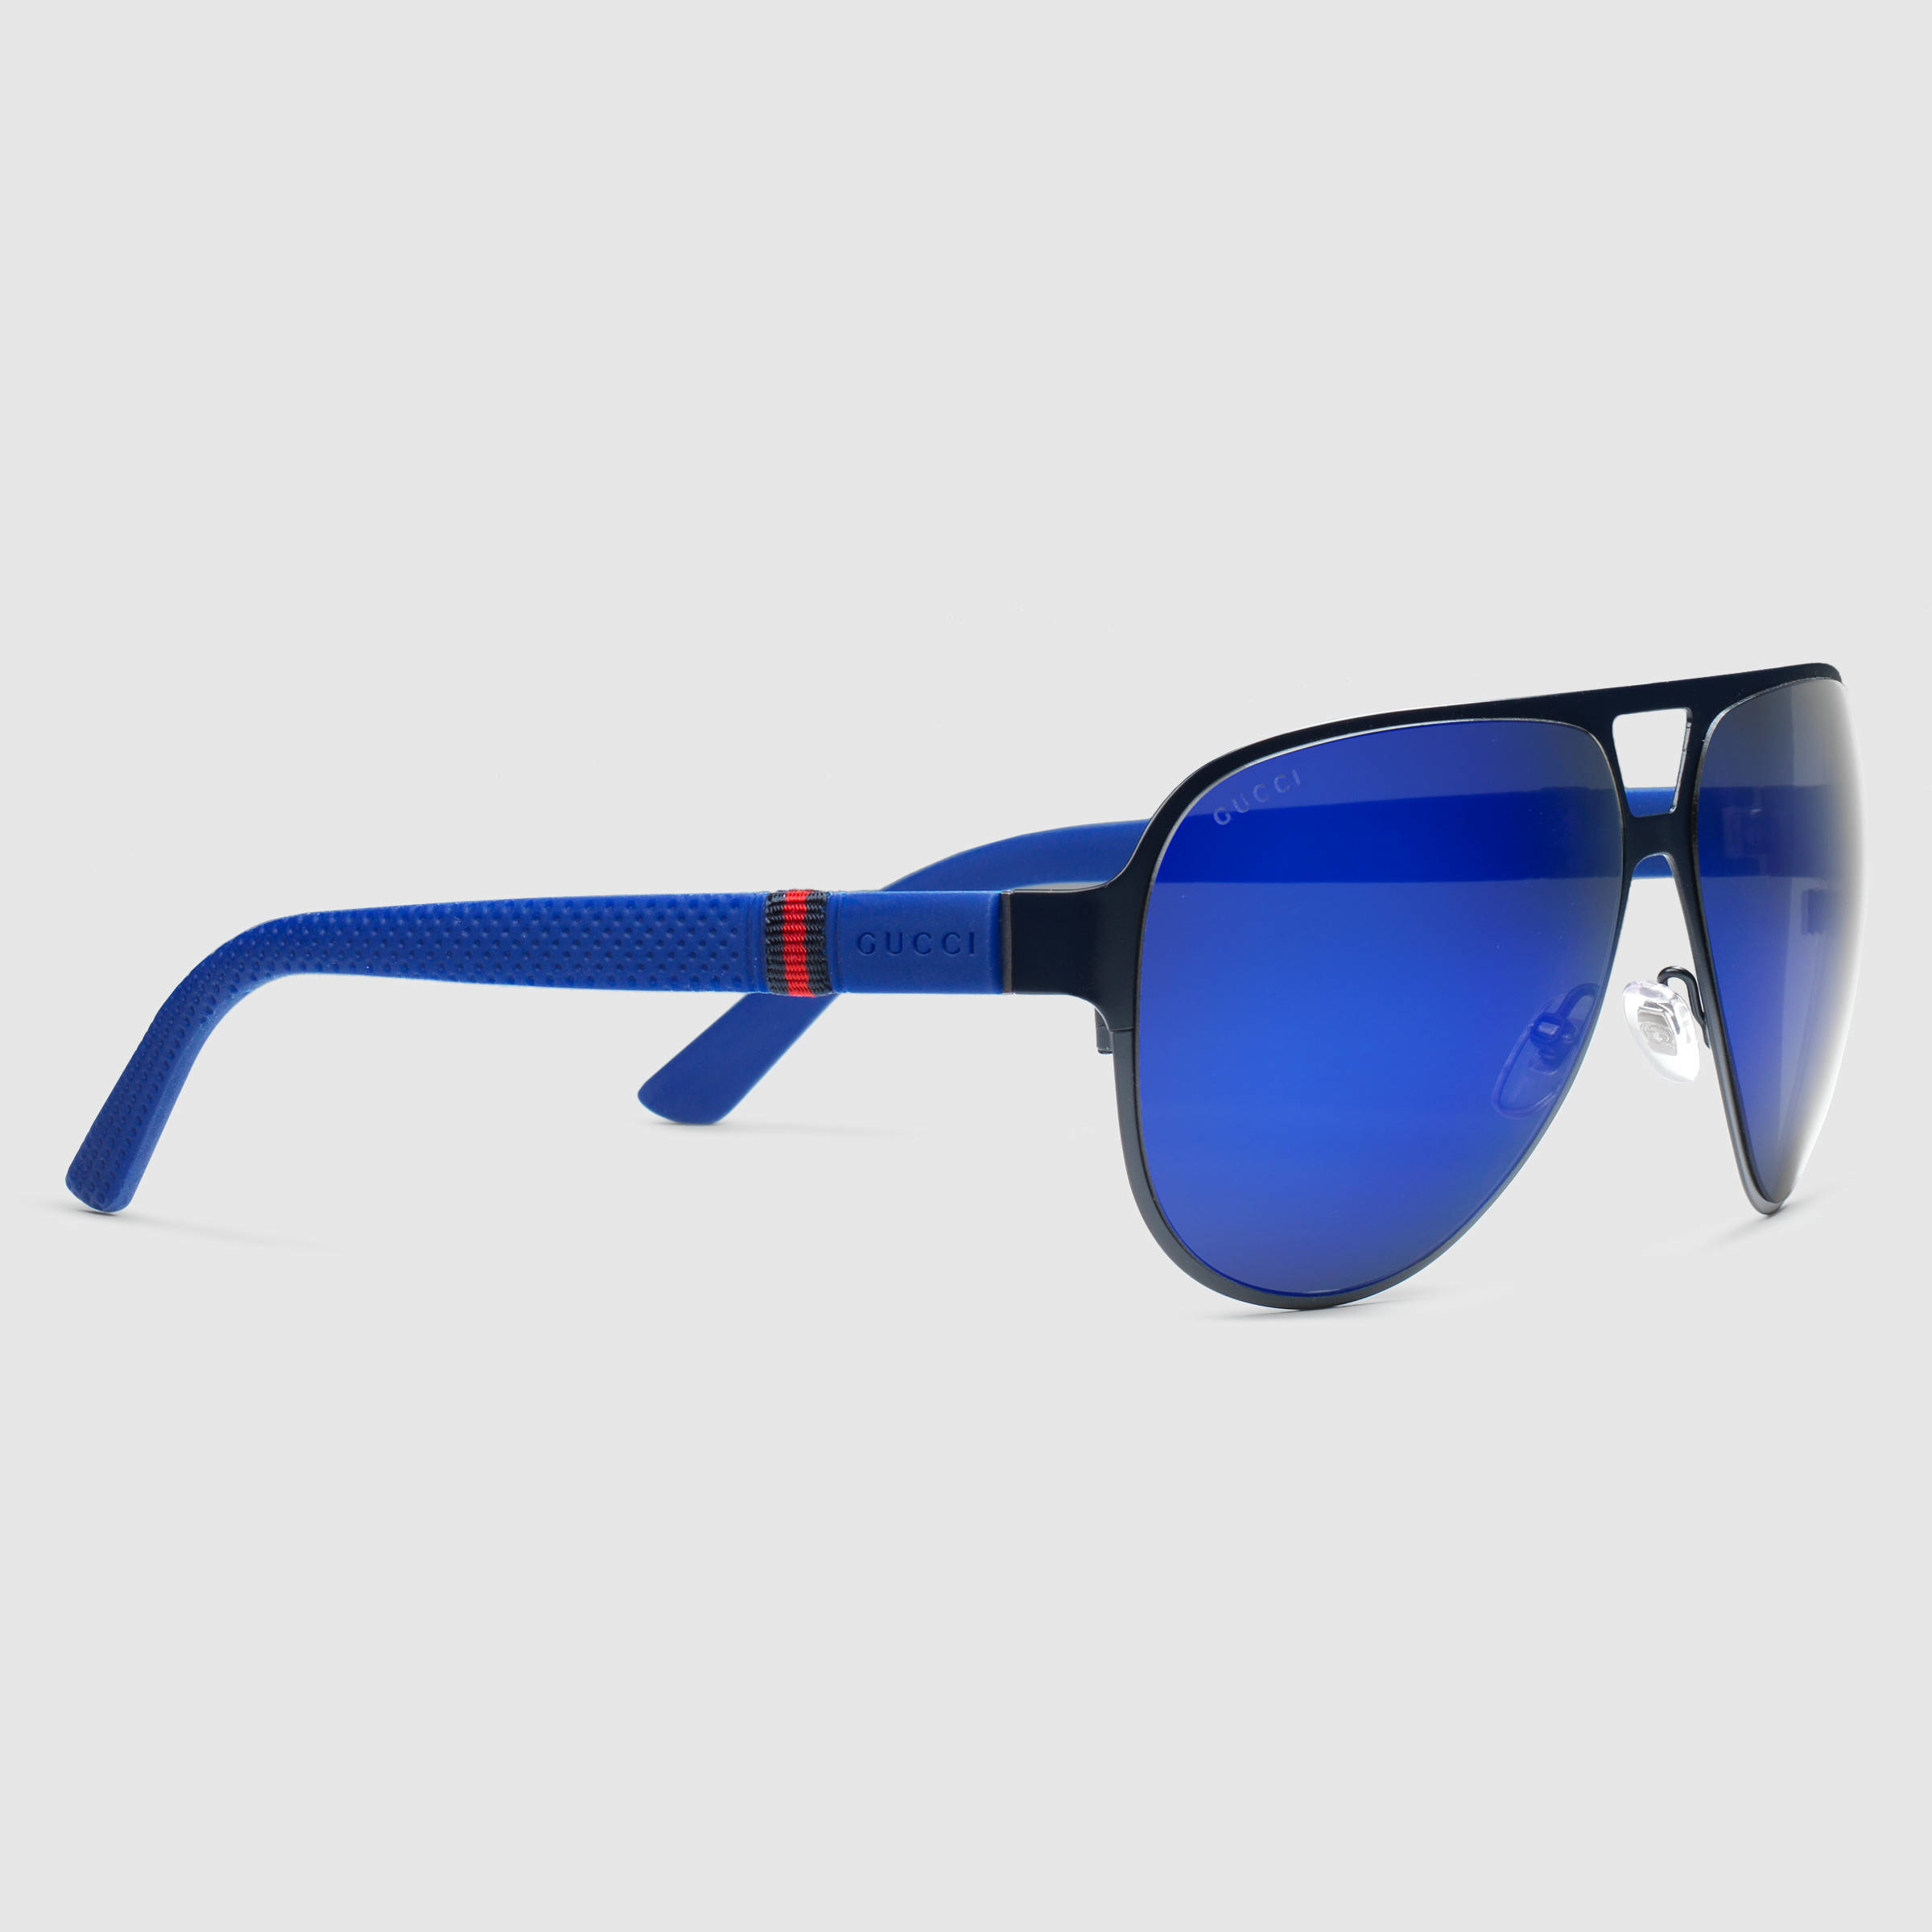 gucci blue steel light steel aviator sunglasses blue product 1 700748781 normal